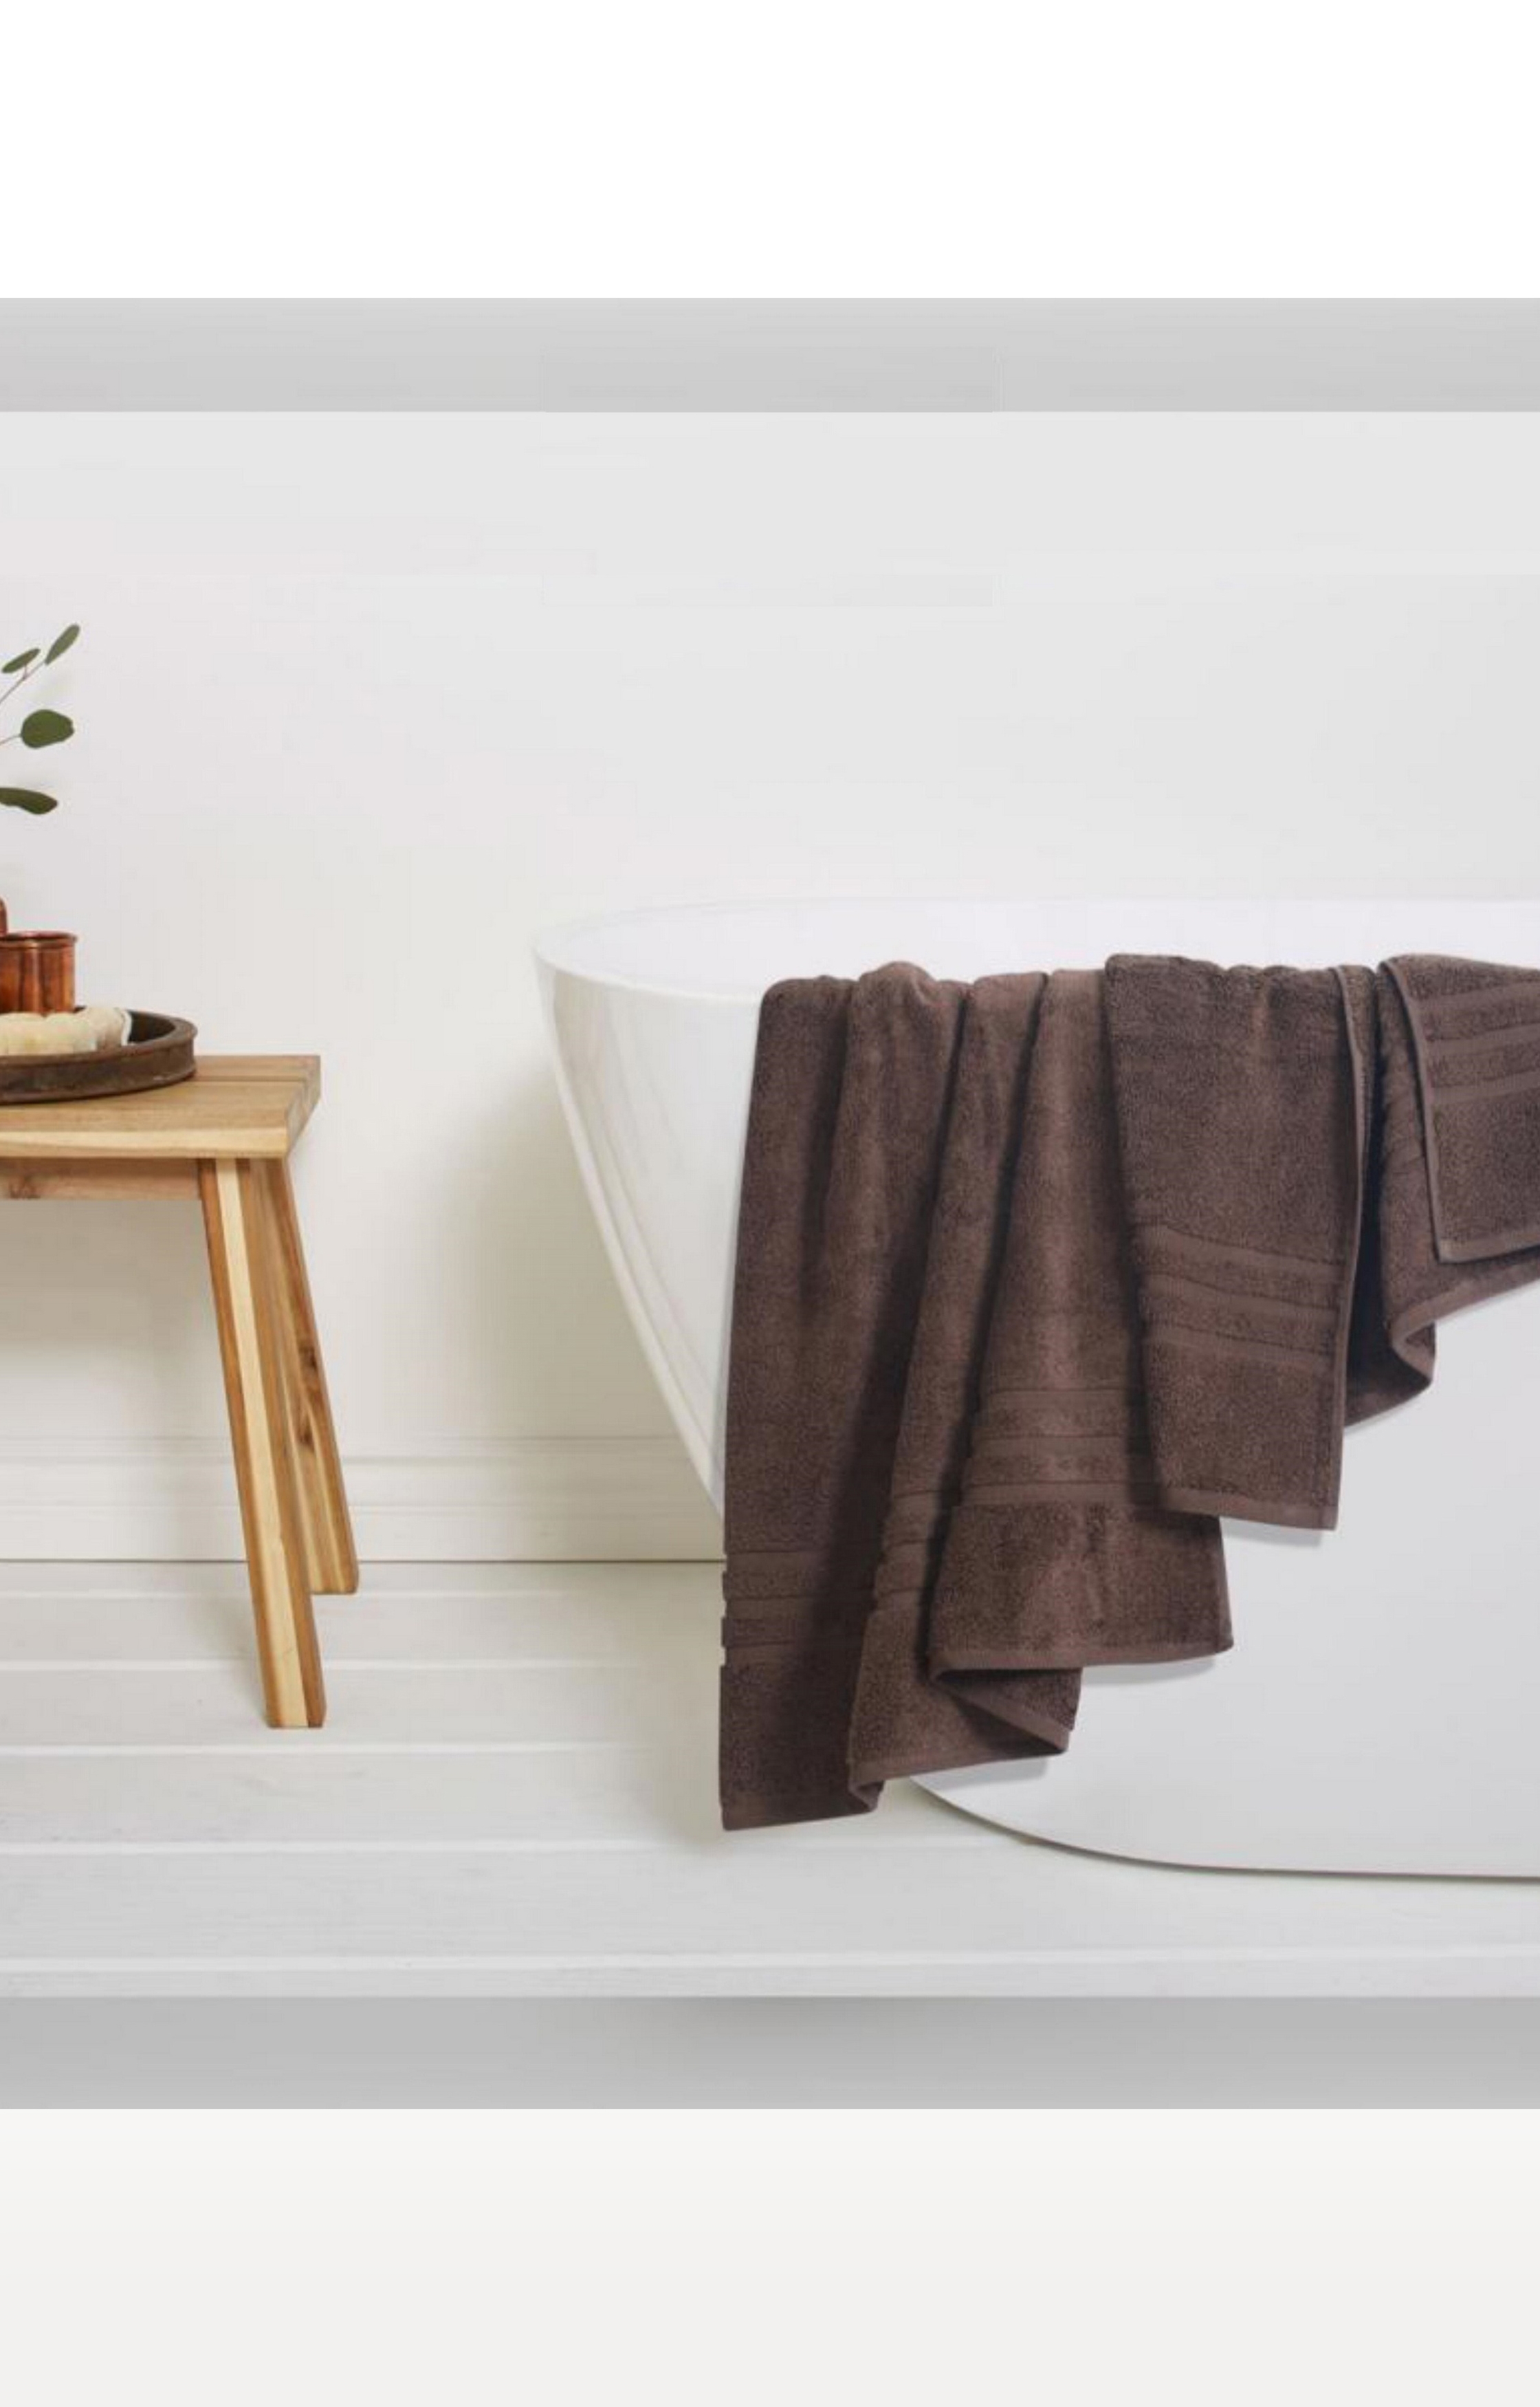 Sita Fabrics | Sita Fabrics Premium Cotton Super Soft Zero Twist Yarn Very Airy 600 GSM Bath Towel - Brown